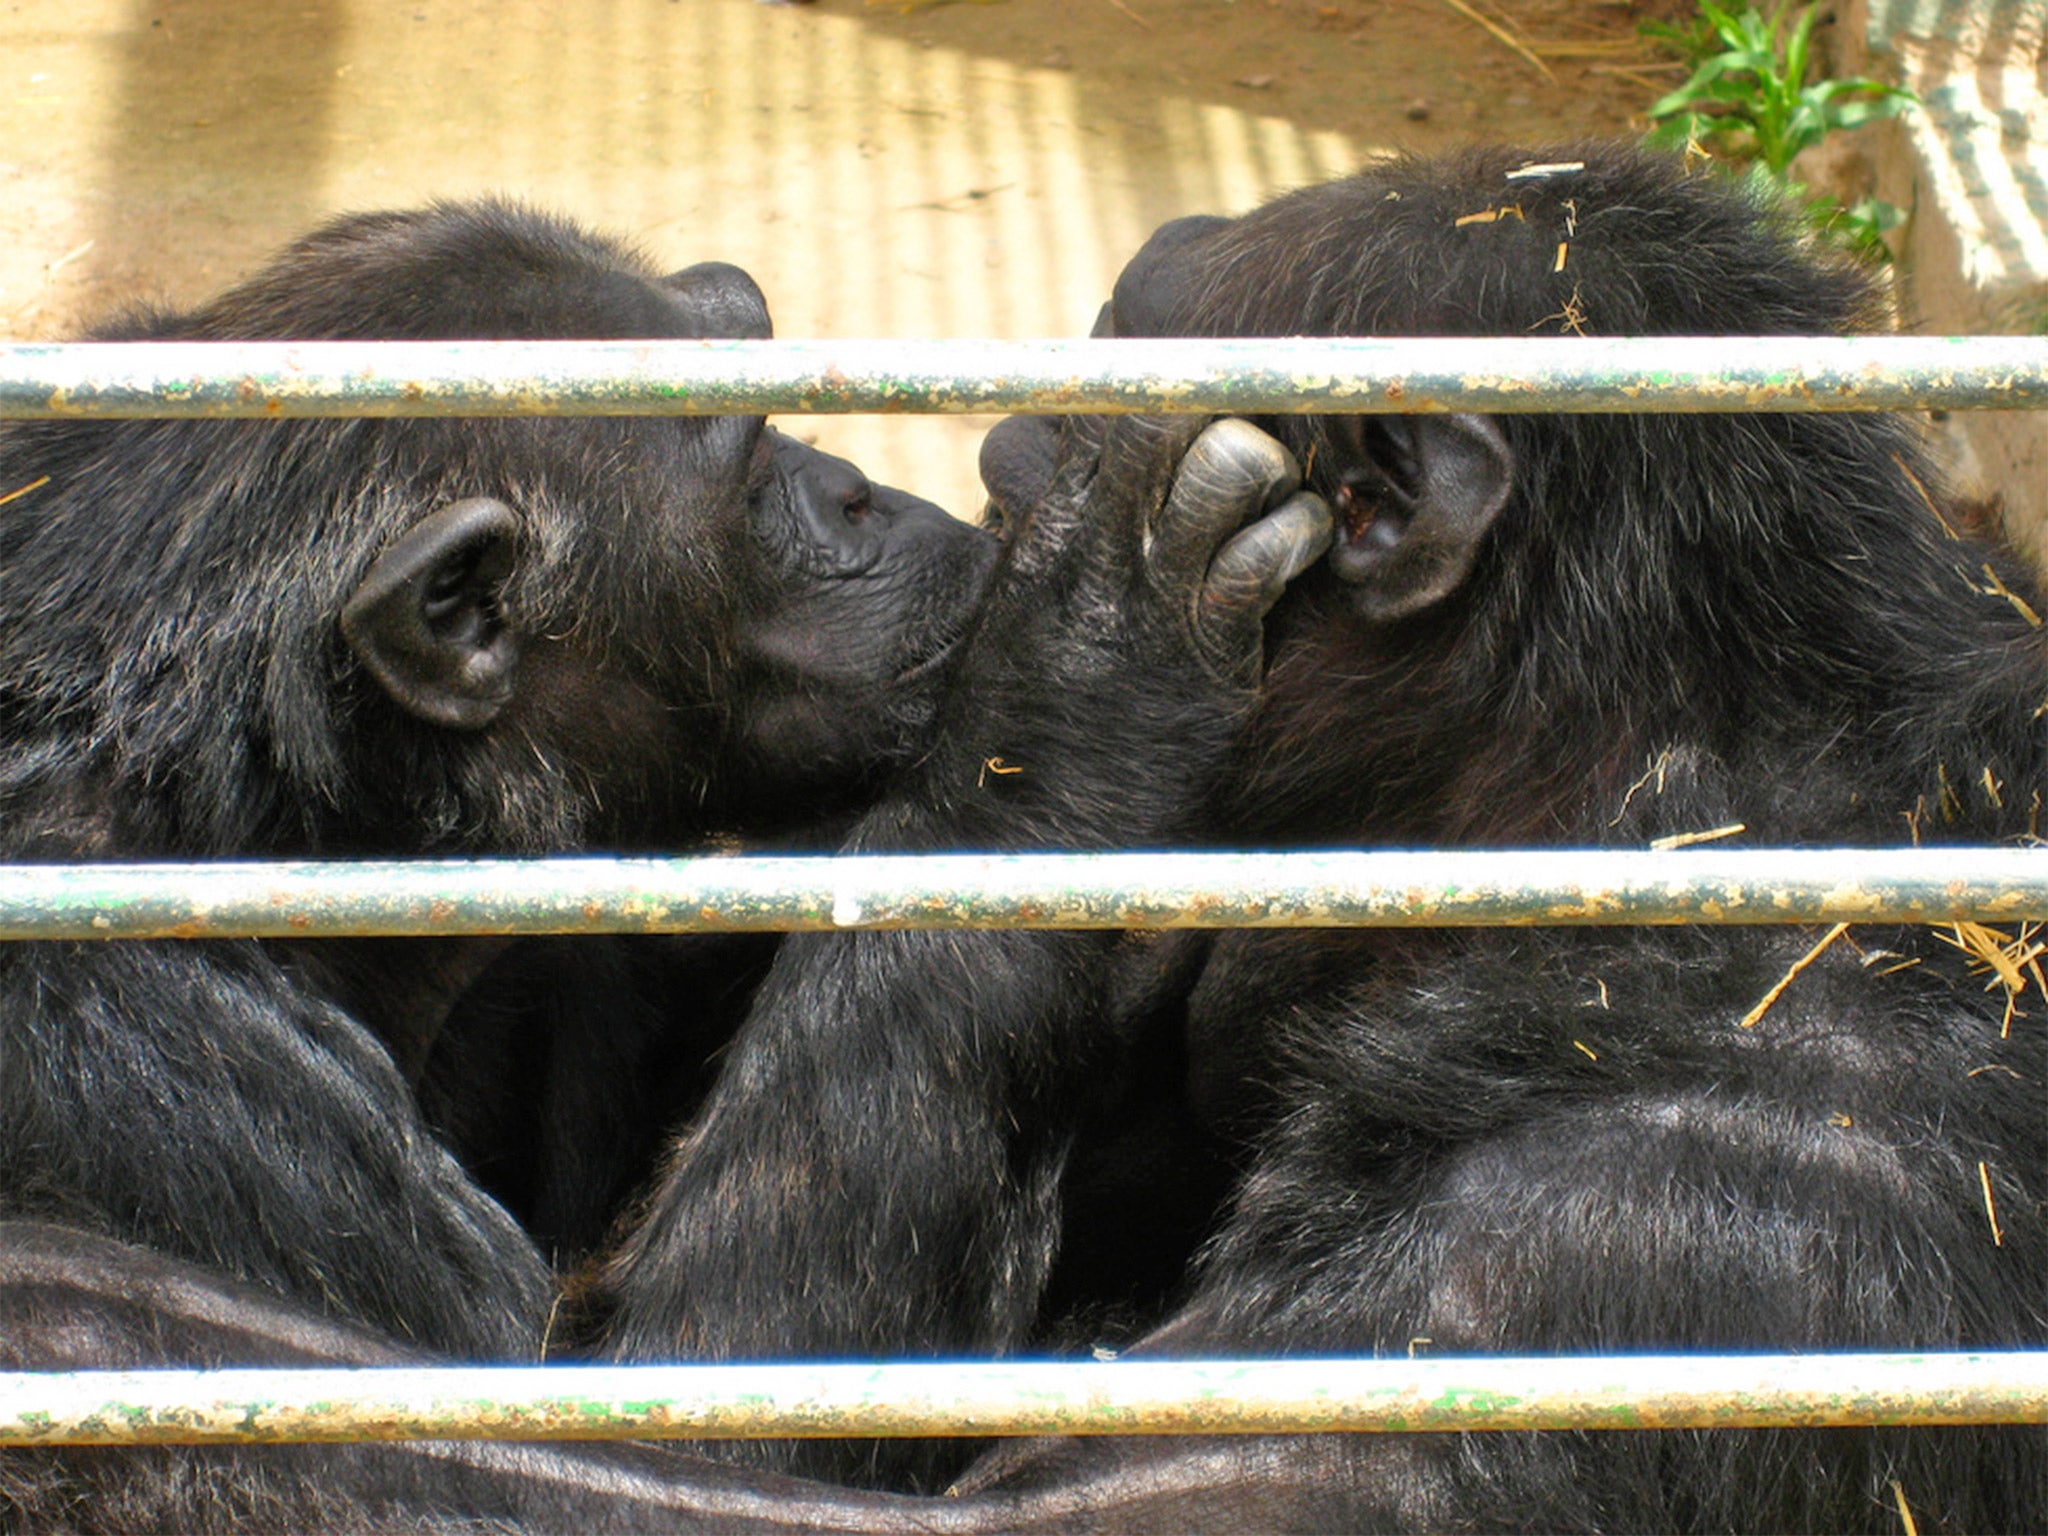 Chimps kissing at Sa Coma's Safari Zoo, pictured in 2008